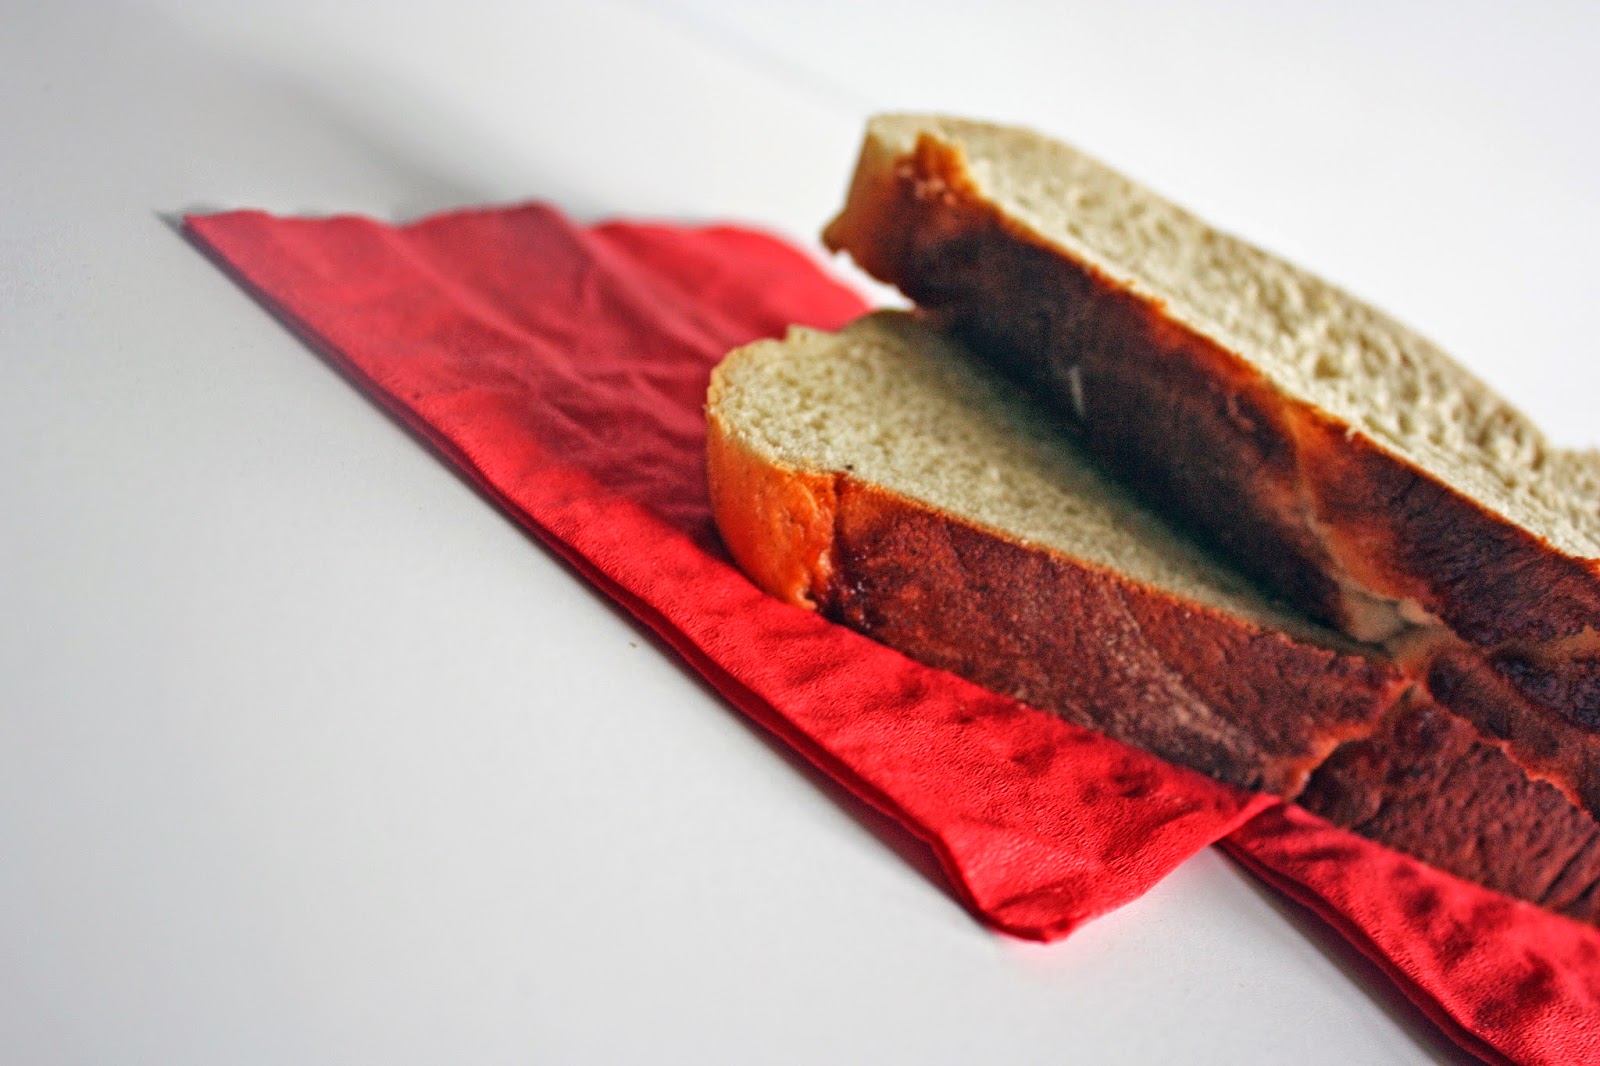 vegan pulla braided cardamom bread Finnish